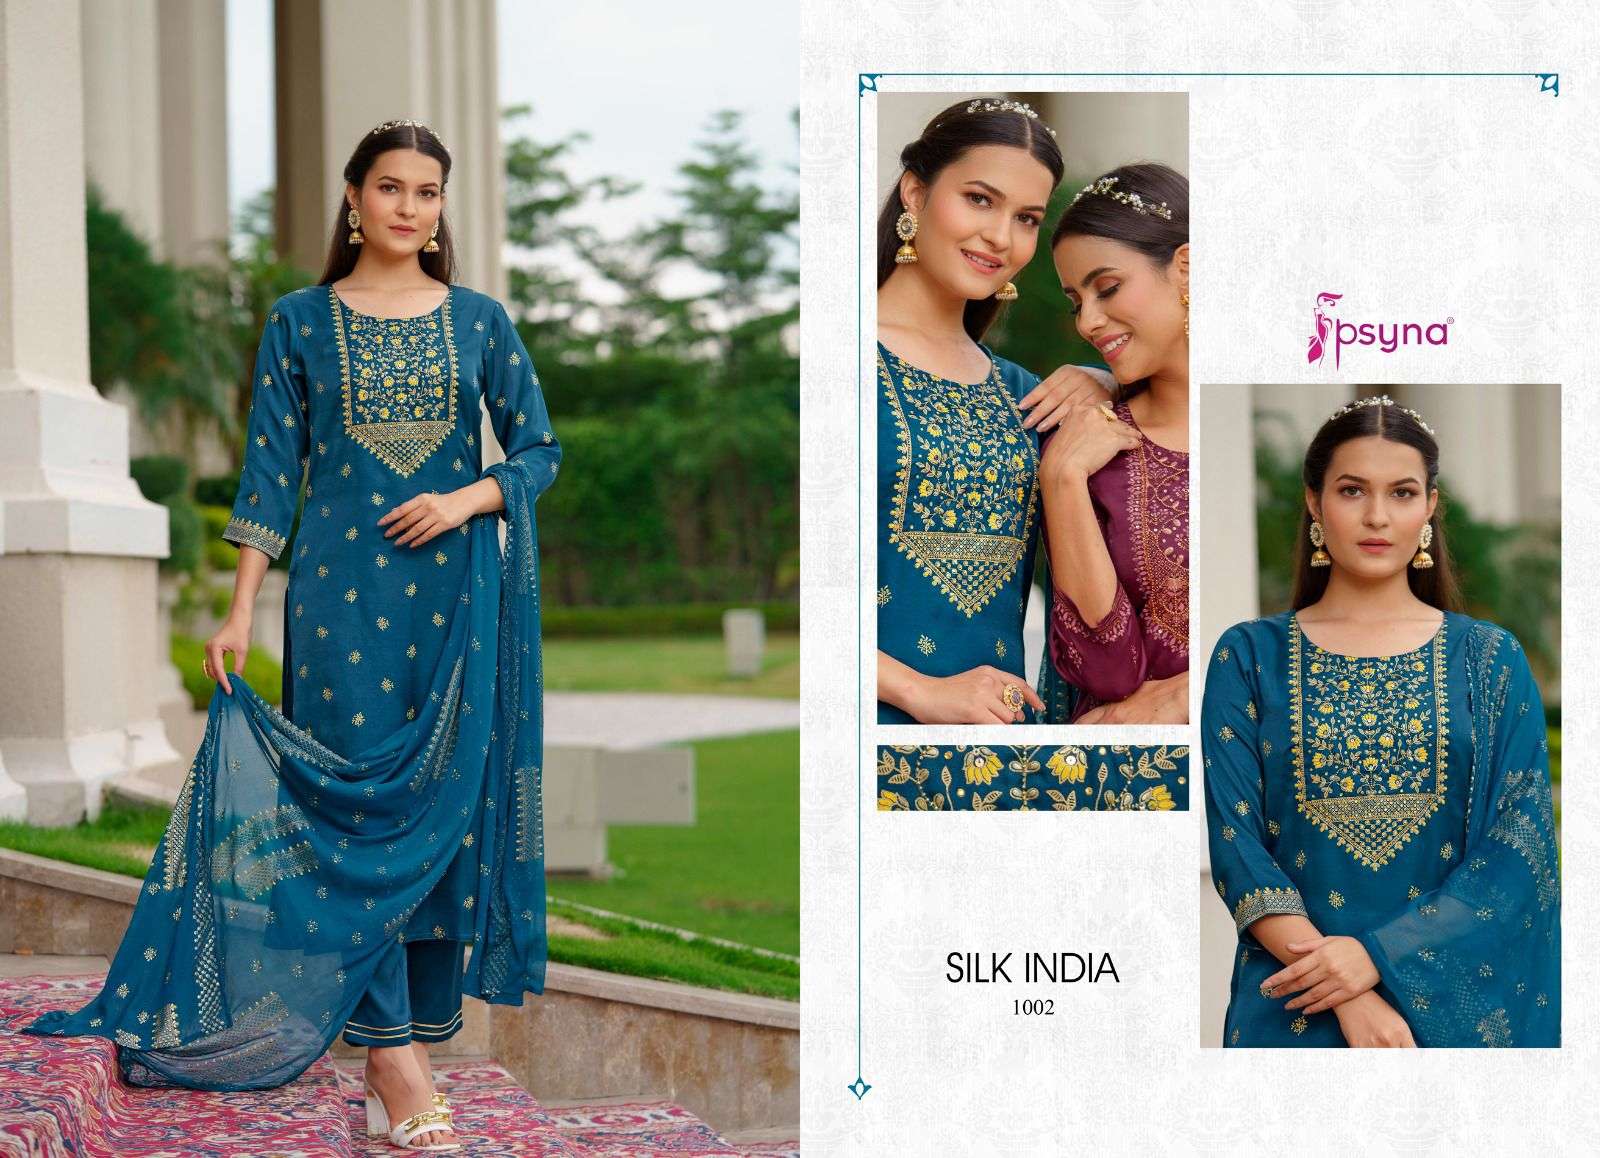 psyna silk india 1001-1006 series fancy designer kurtis catalogue online dealer surat 